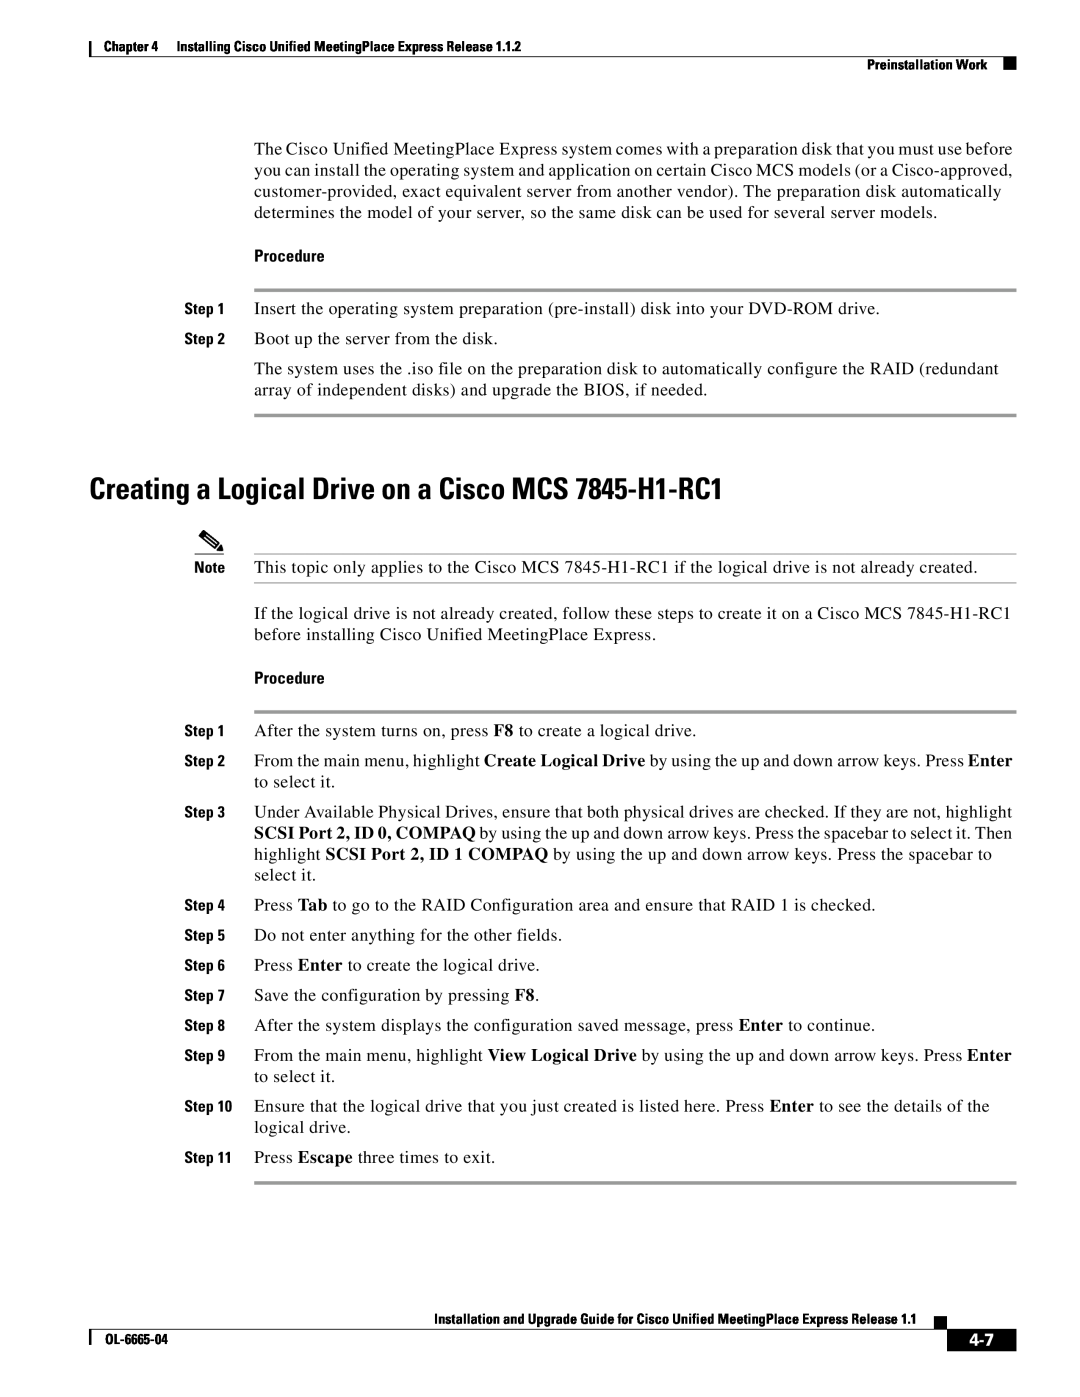 Cisco Systems MCS 7825, MCS 7835 manual Creating a Logical Drive on a Cisco MCS 7845-H1-RC1, Procedure 